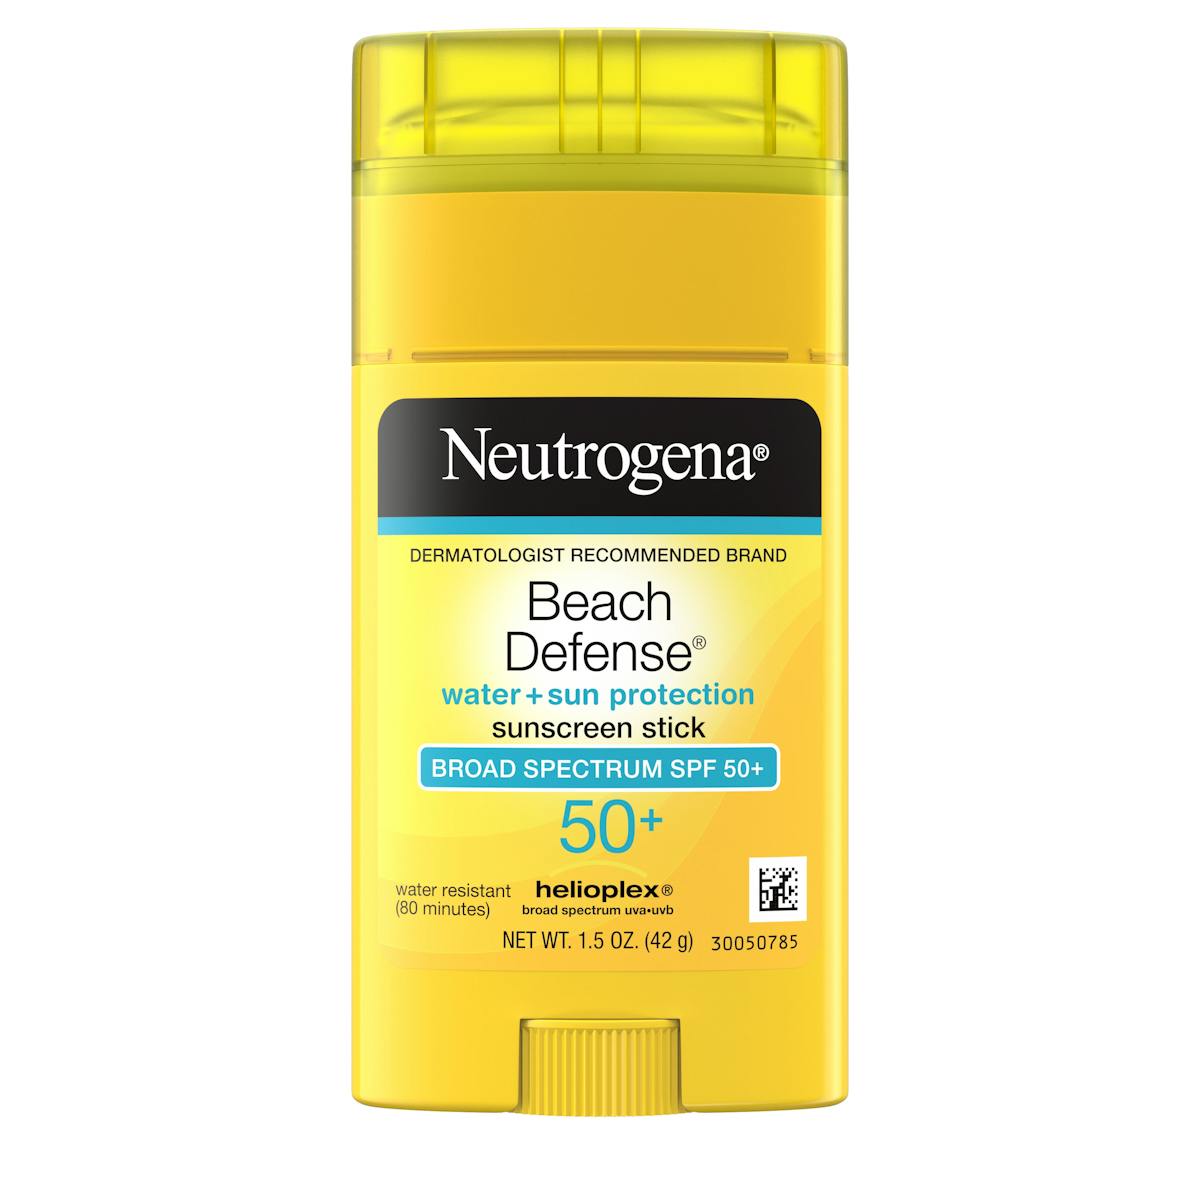 Beach Defense Water + Sun Protection Sunscreen Stick Broad Spectrum SPF 50+